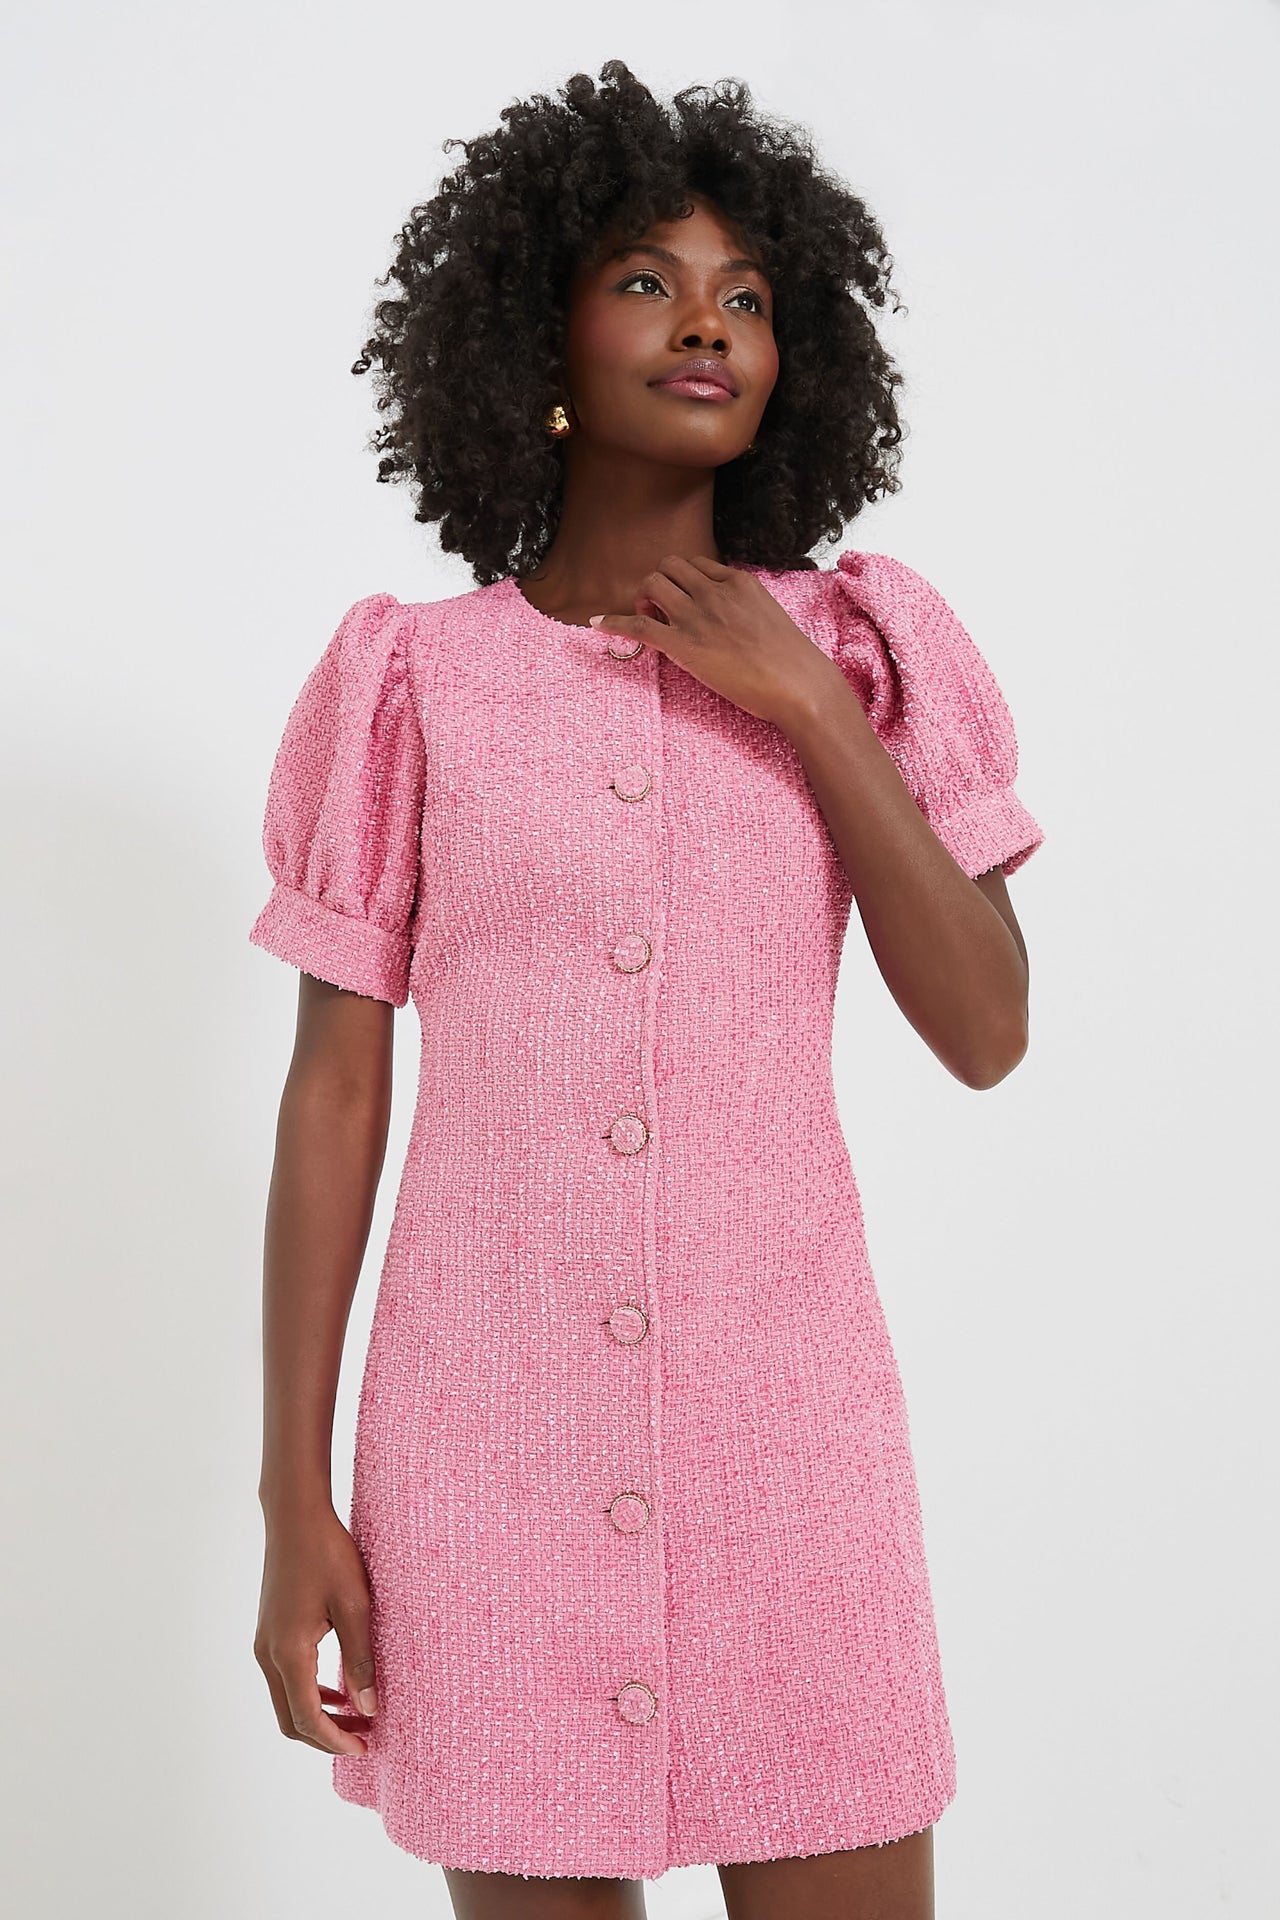 Hyacinth House Pink Tweed Kit Mini Dress